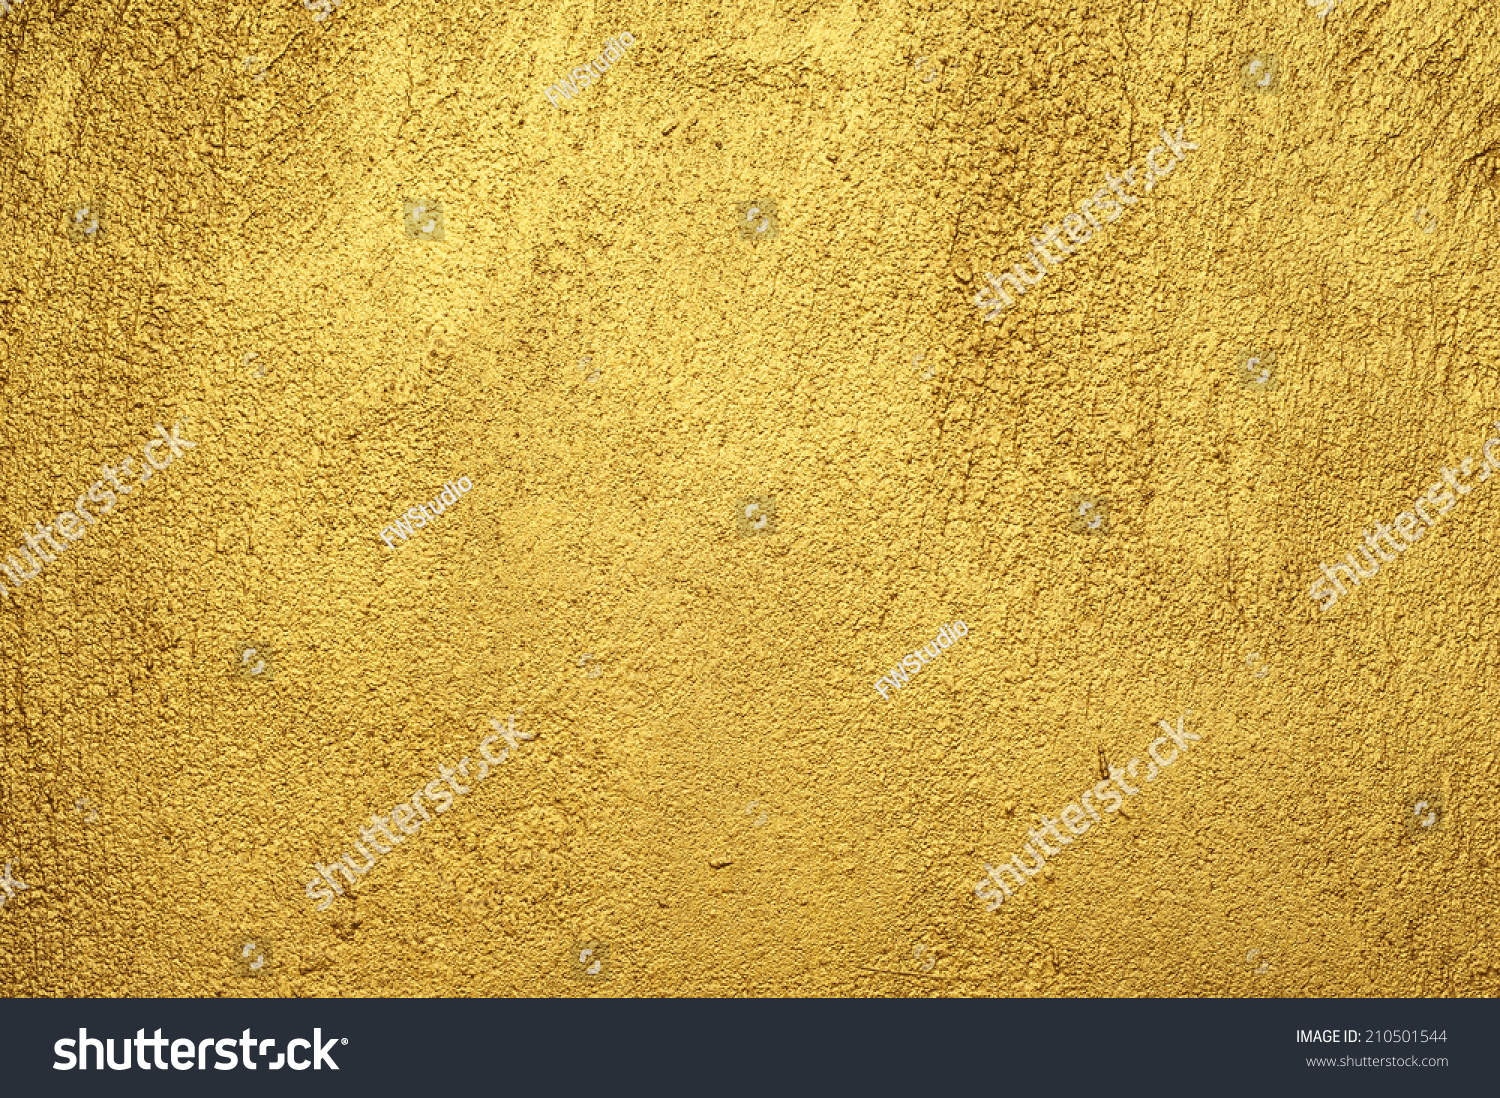 Golden Wall Background Stock Photo 210501544 : Shutterstock